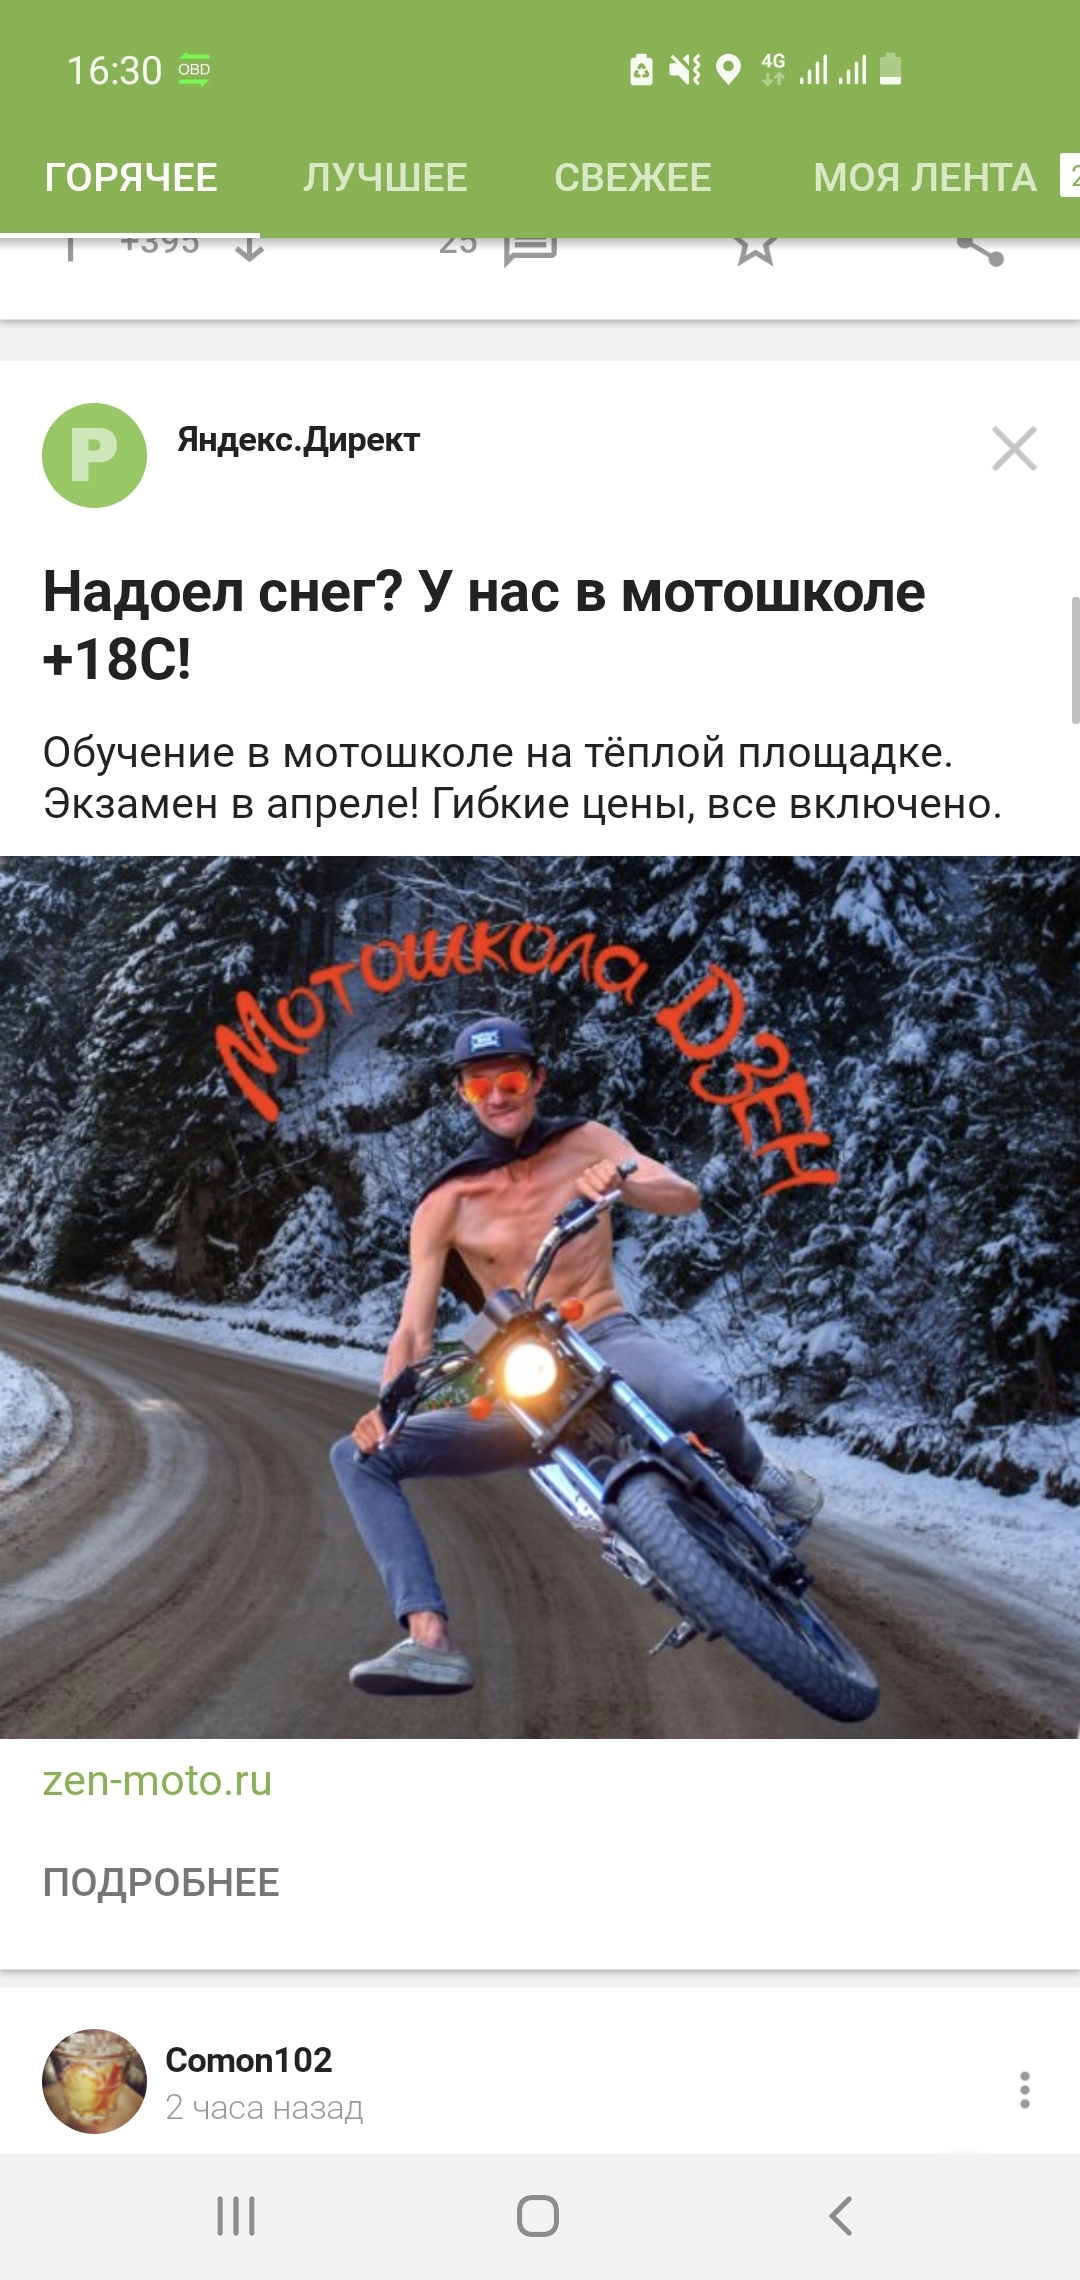 Yandex is enough! - Yandex Direct, Advertising, Moto